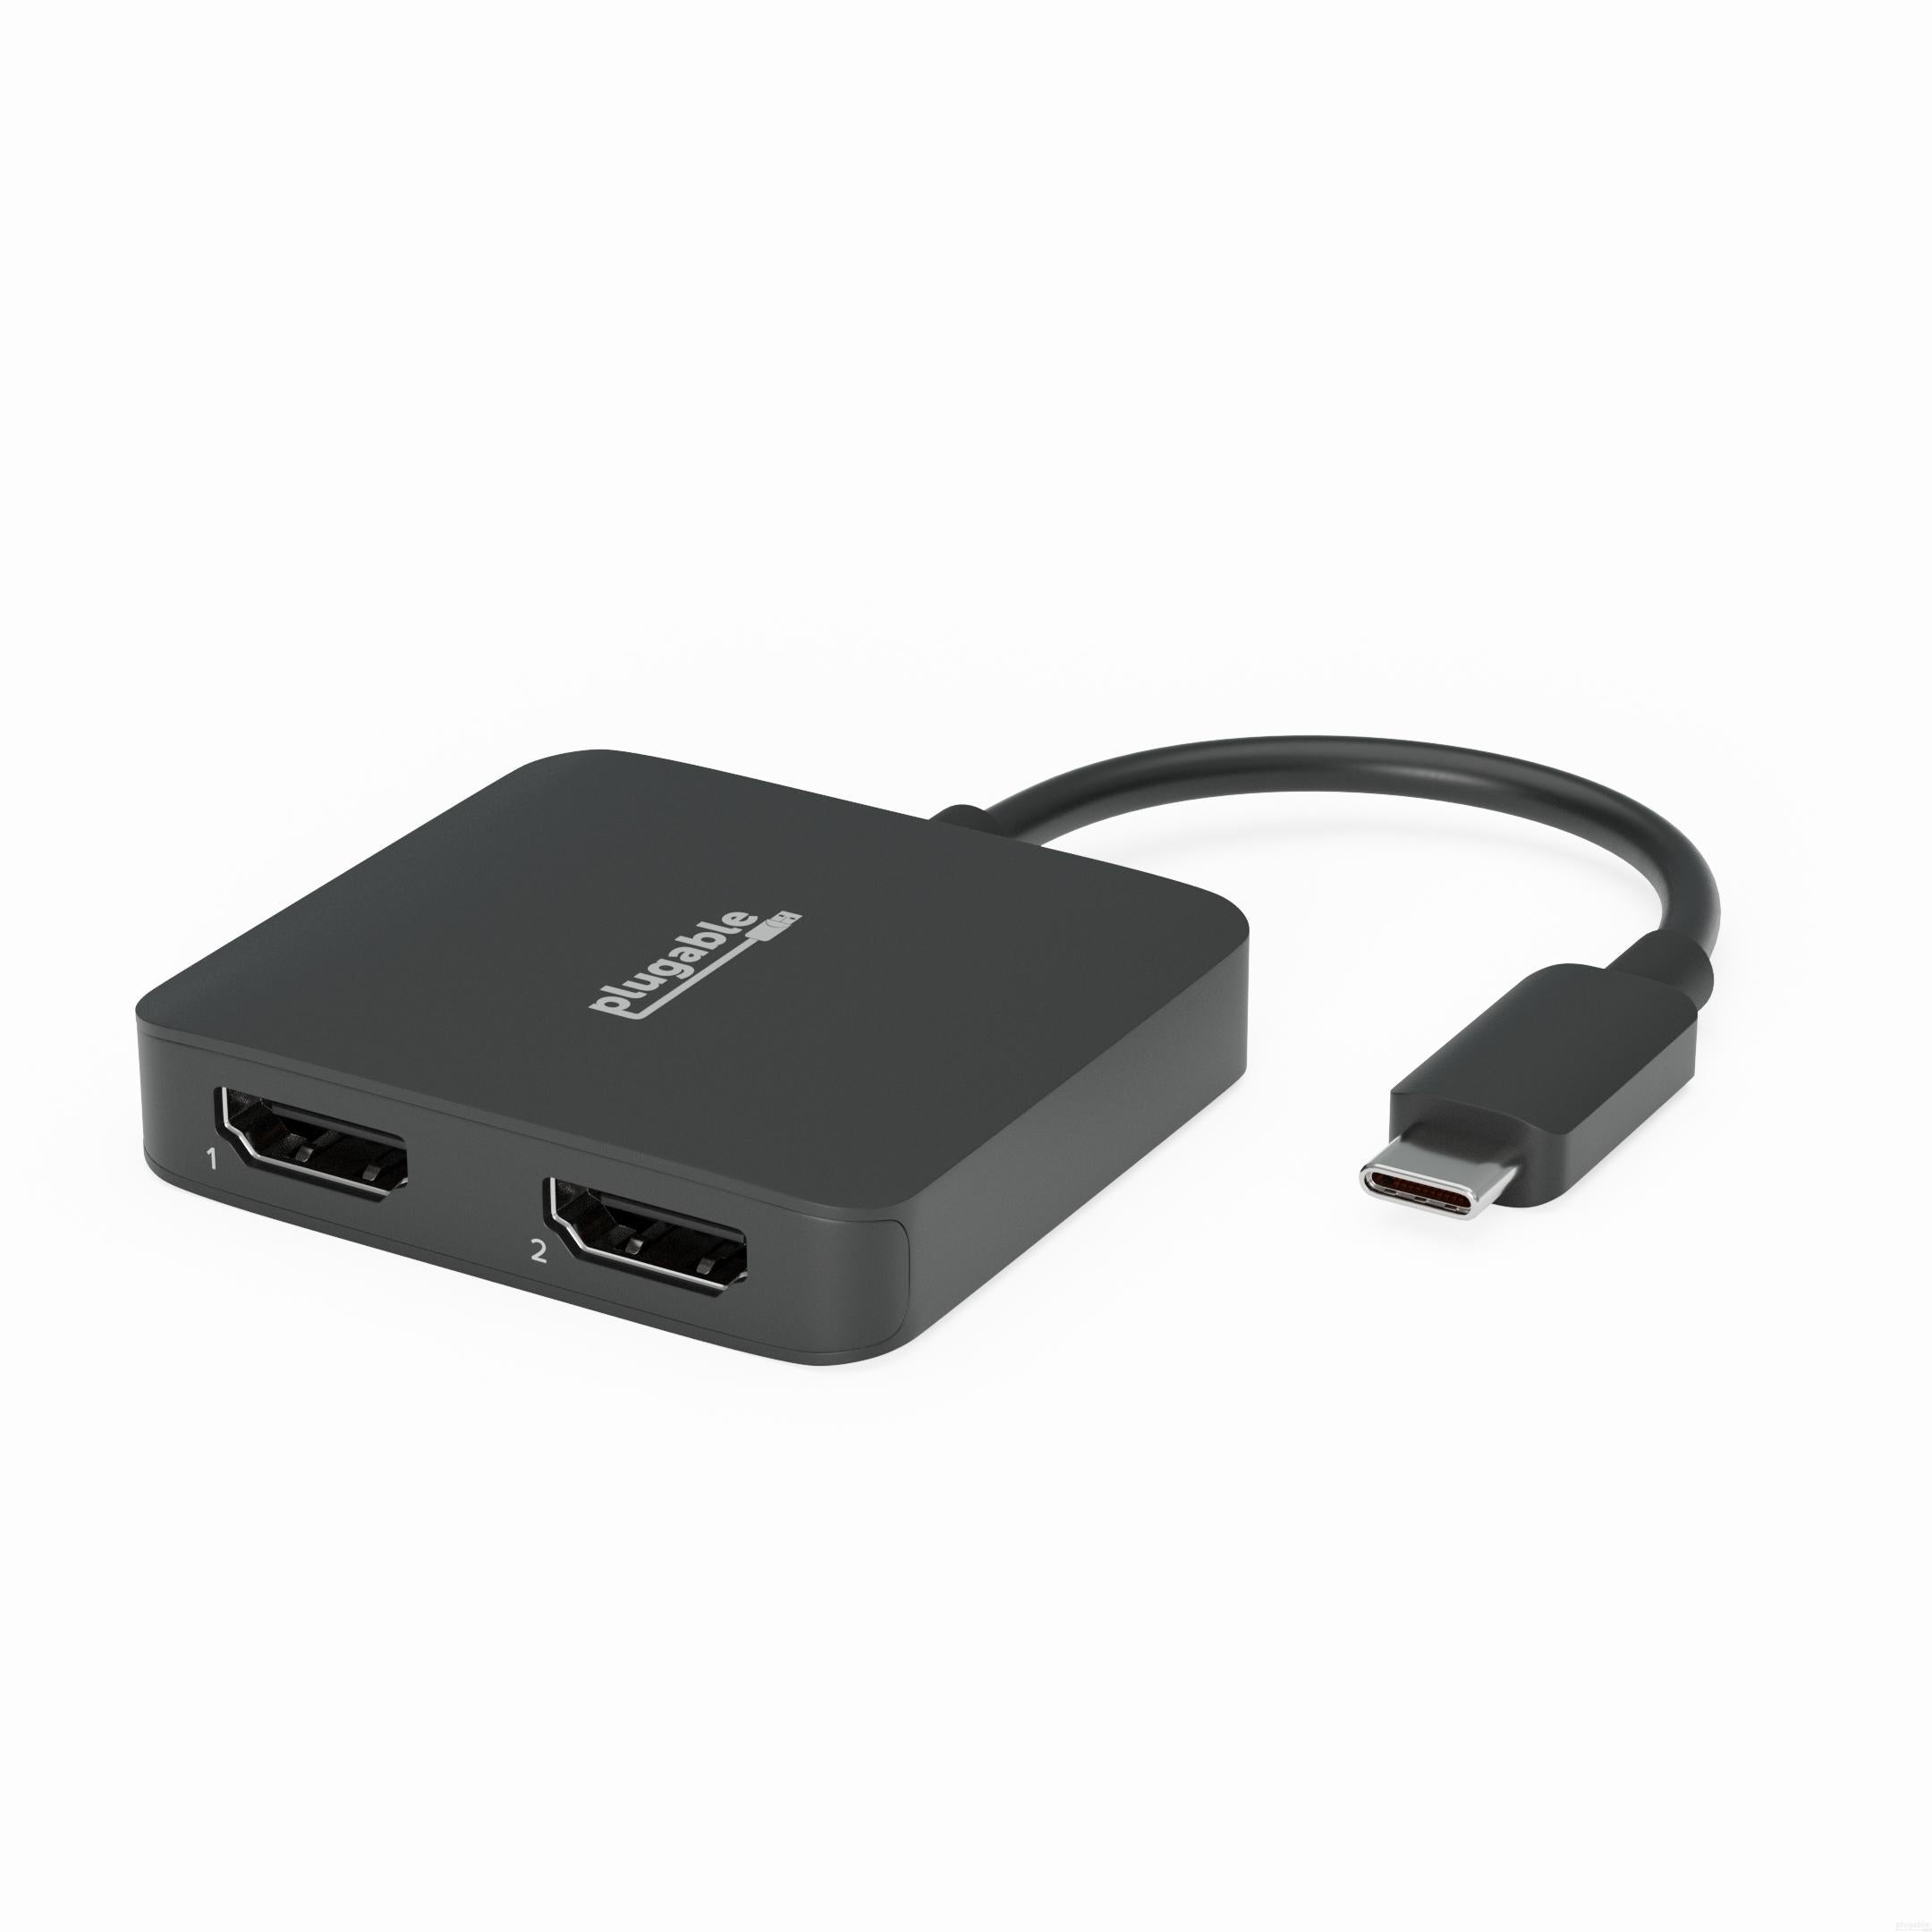 Plugable USB-C Dual 4K HDMI MST Display Adapter – Plugable Technologies